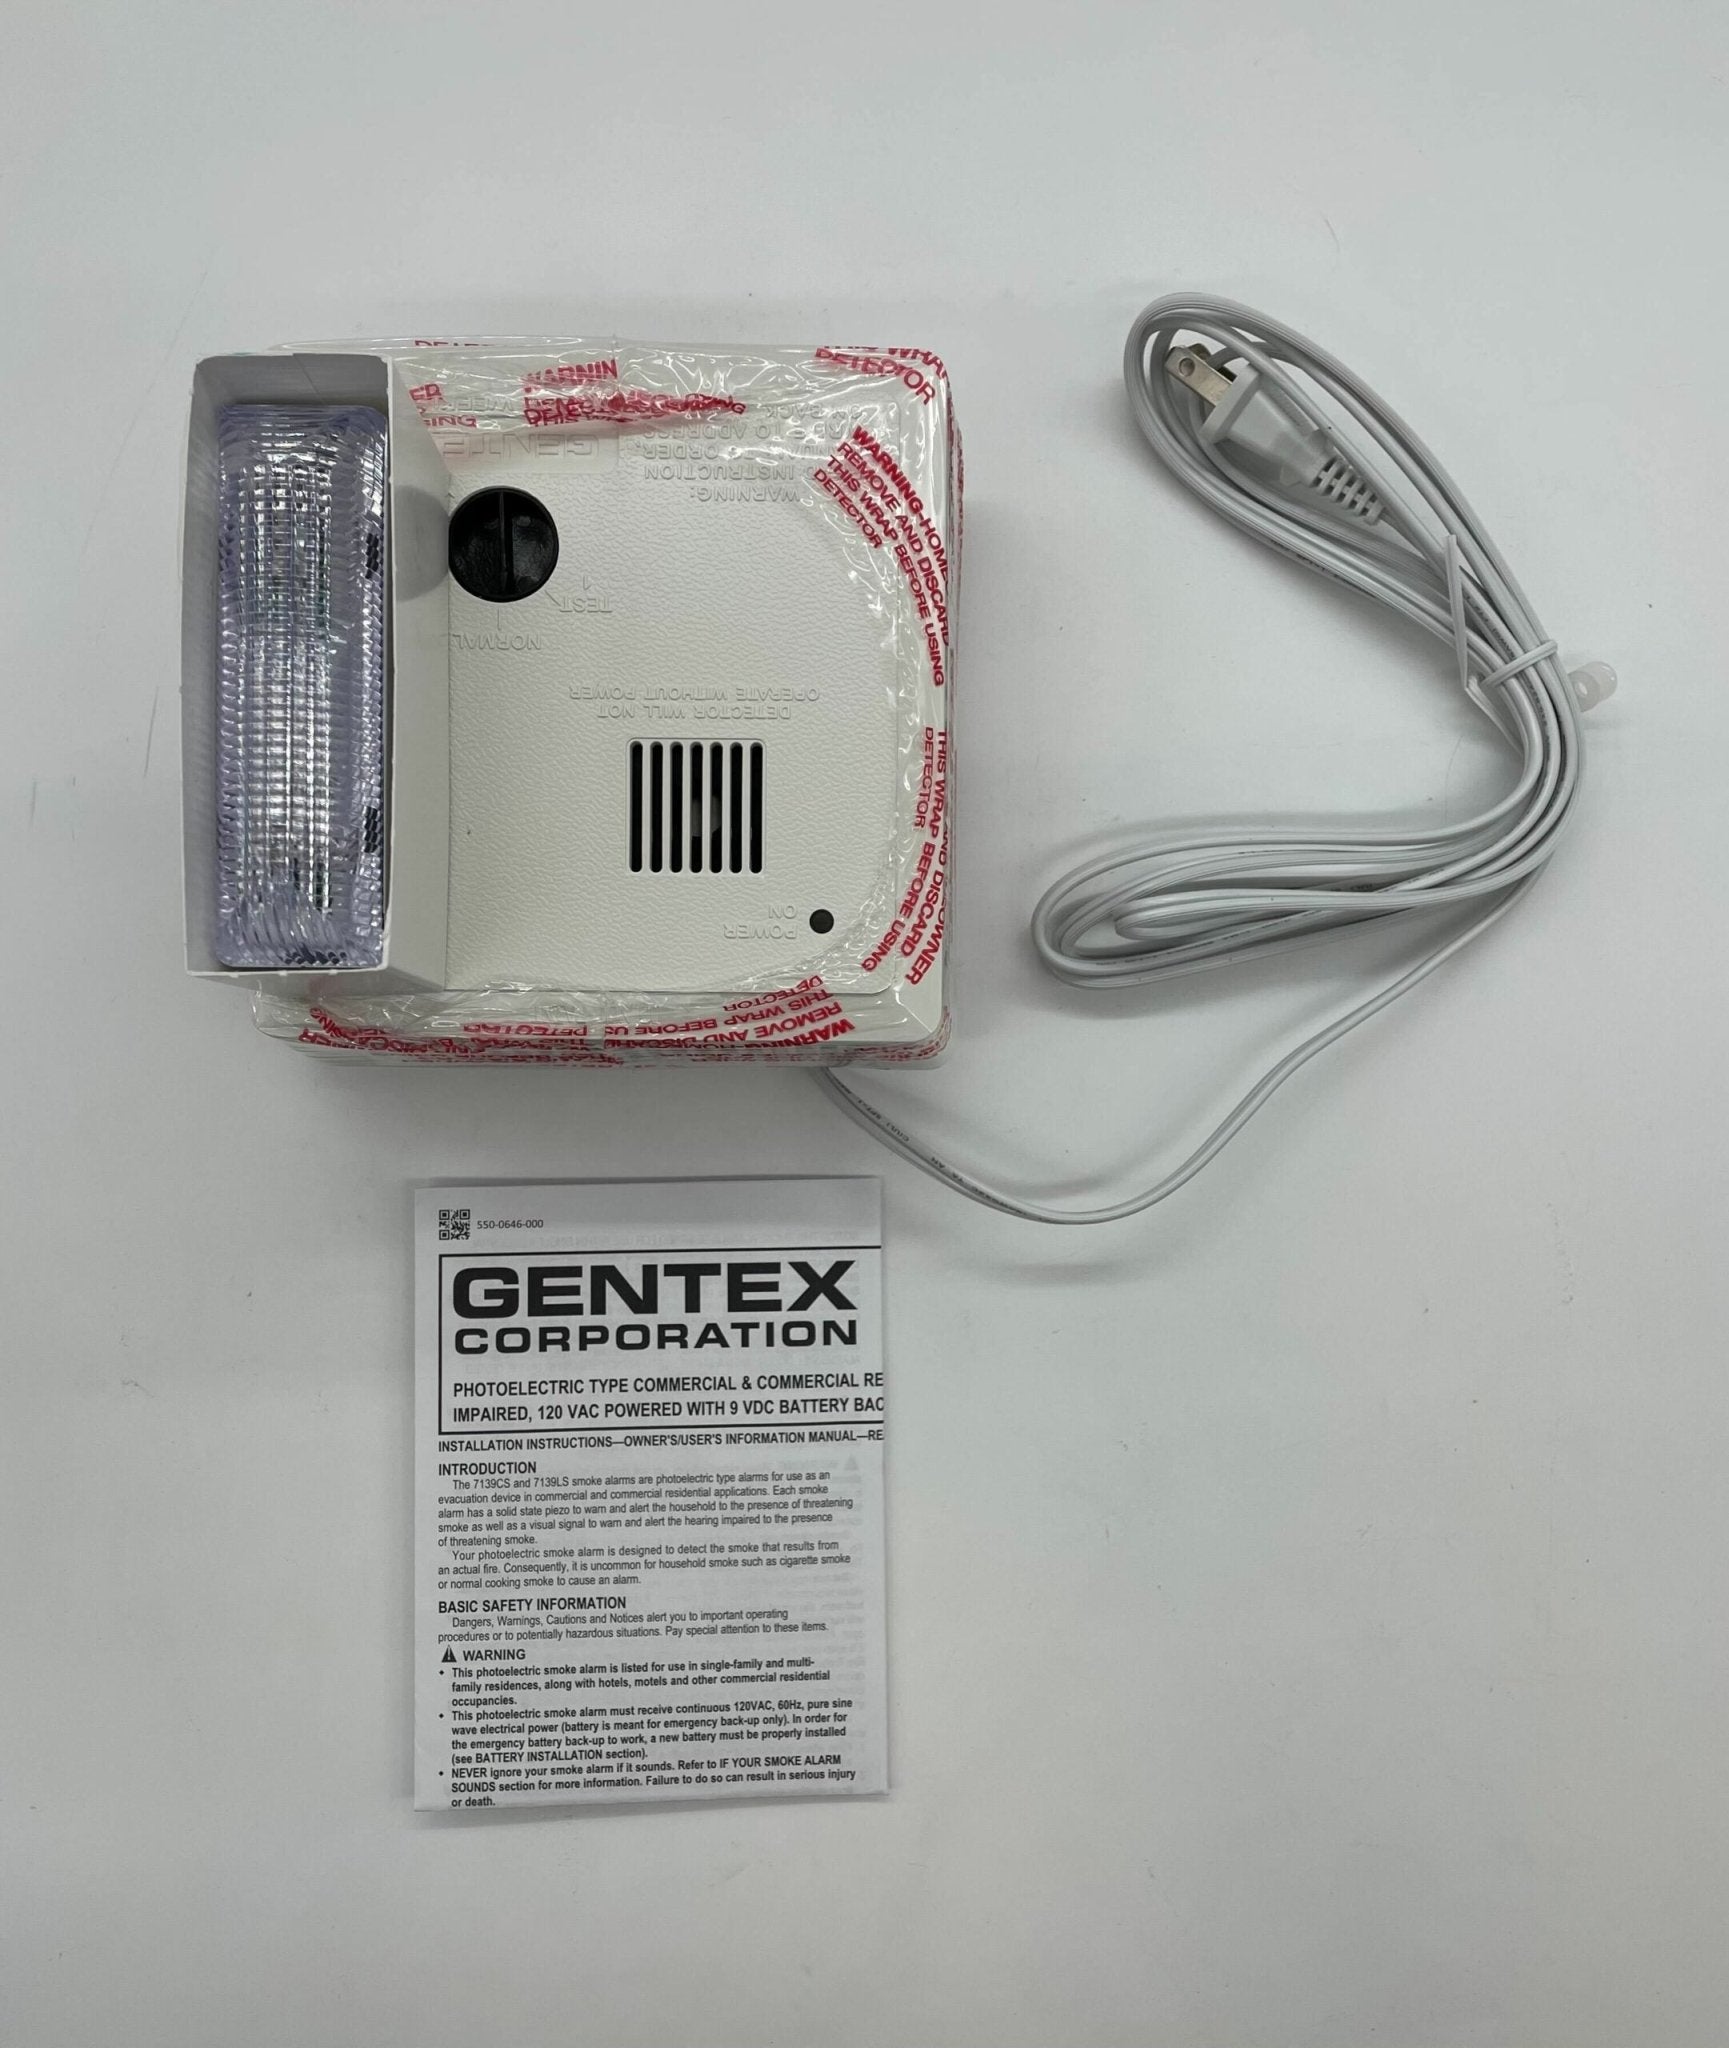 Gentex 7139LS - The Fire Alarm Supplier